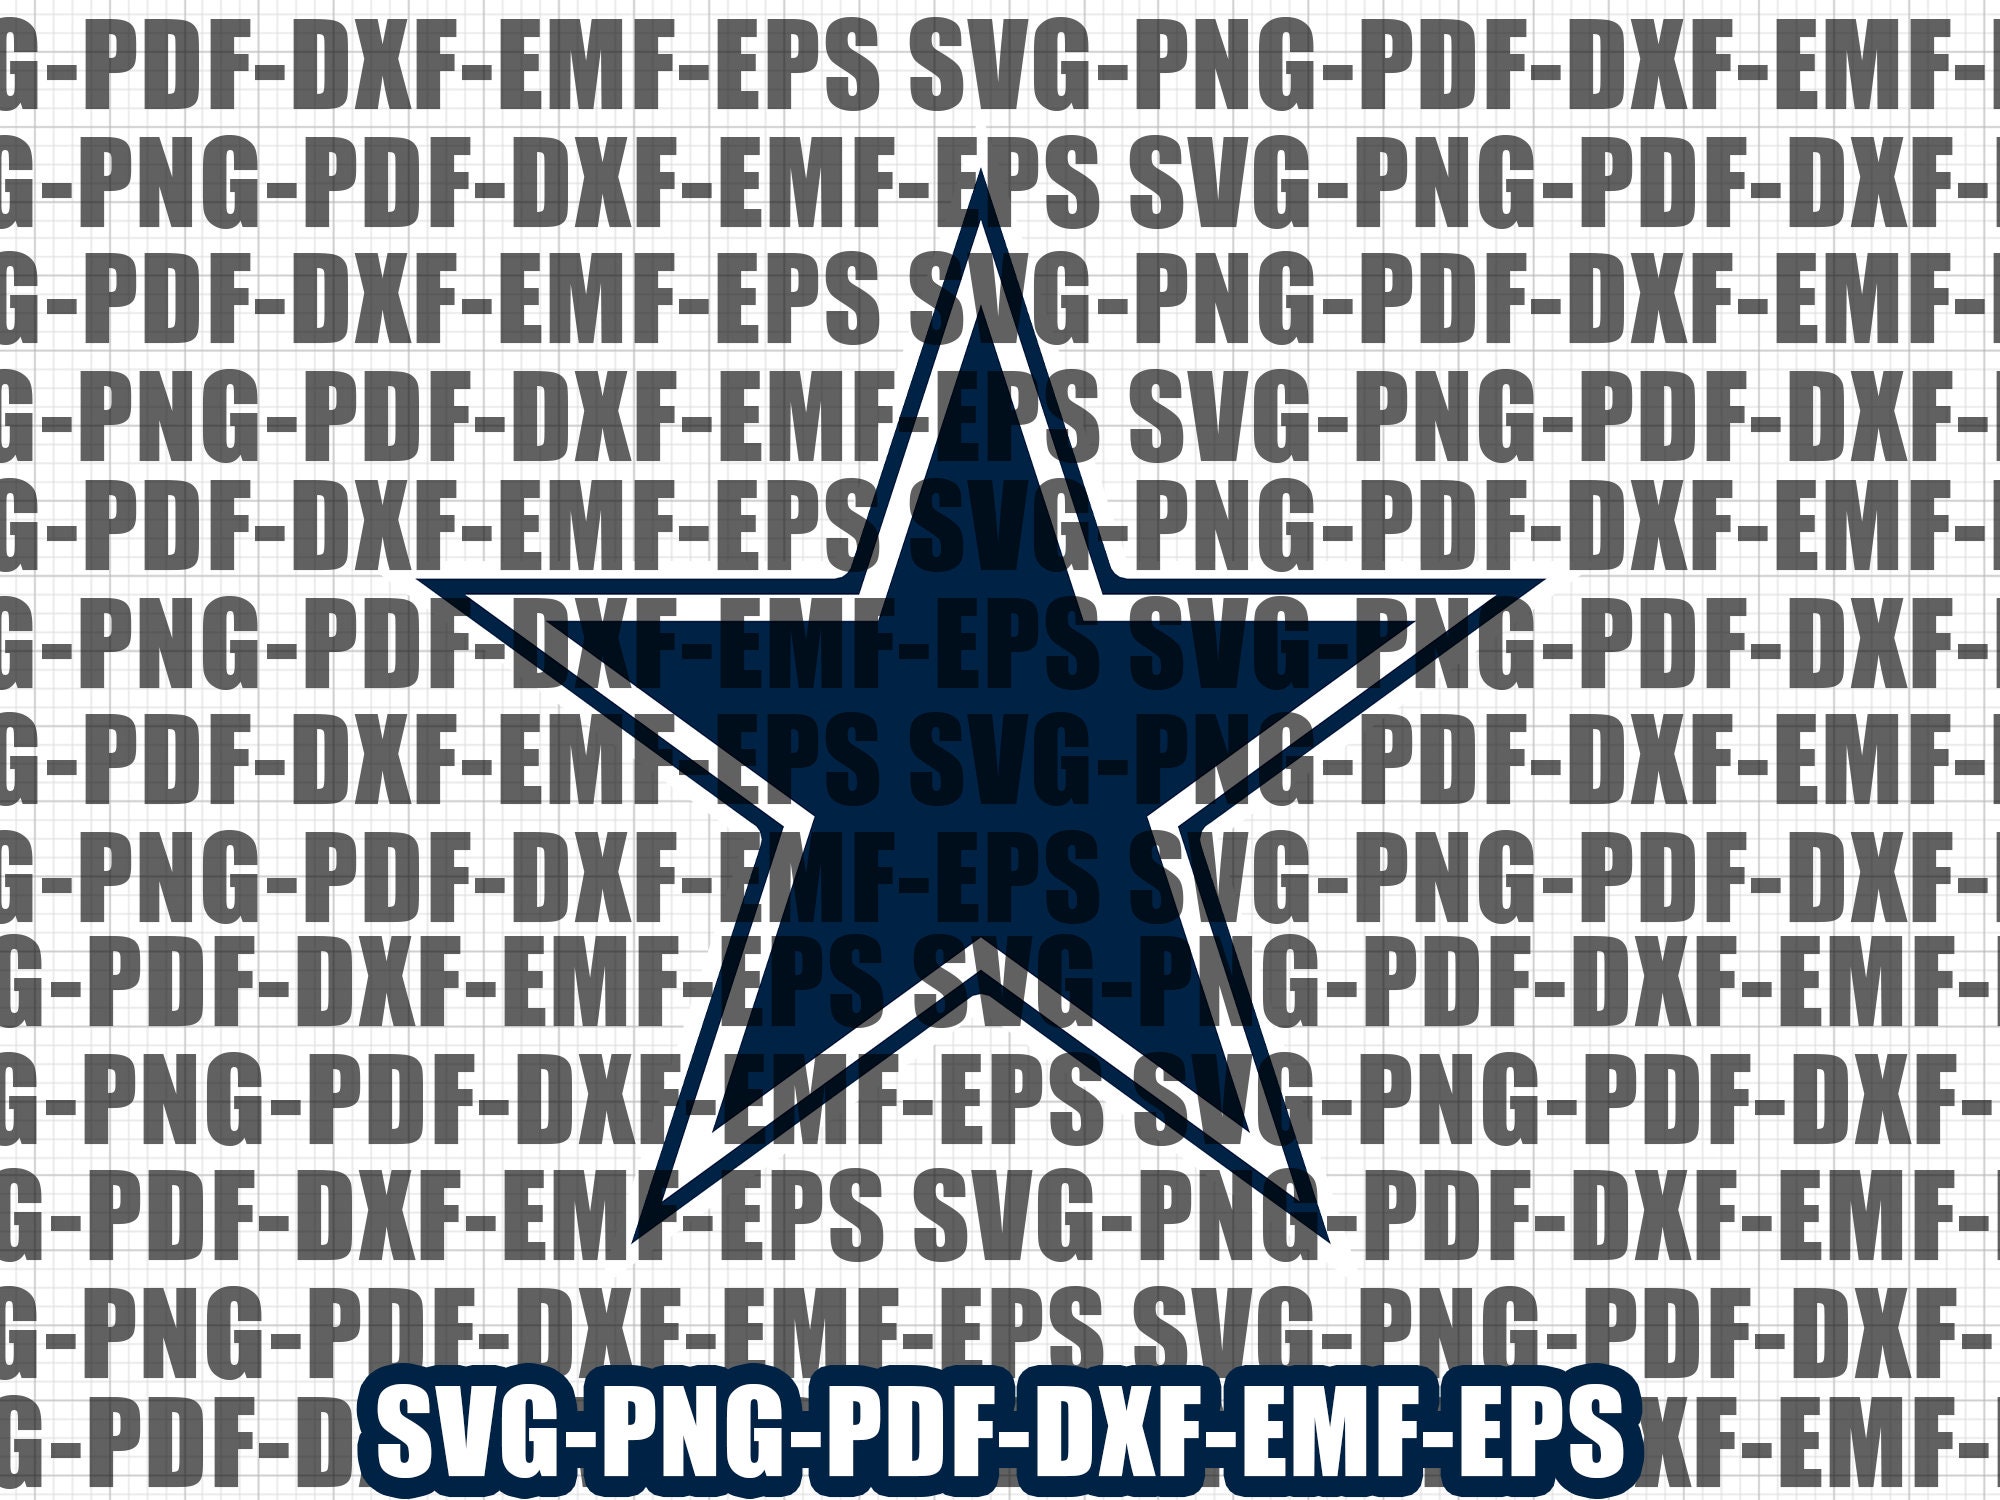 Dallas Cowboys lines through SVG DXF PNG